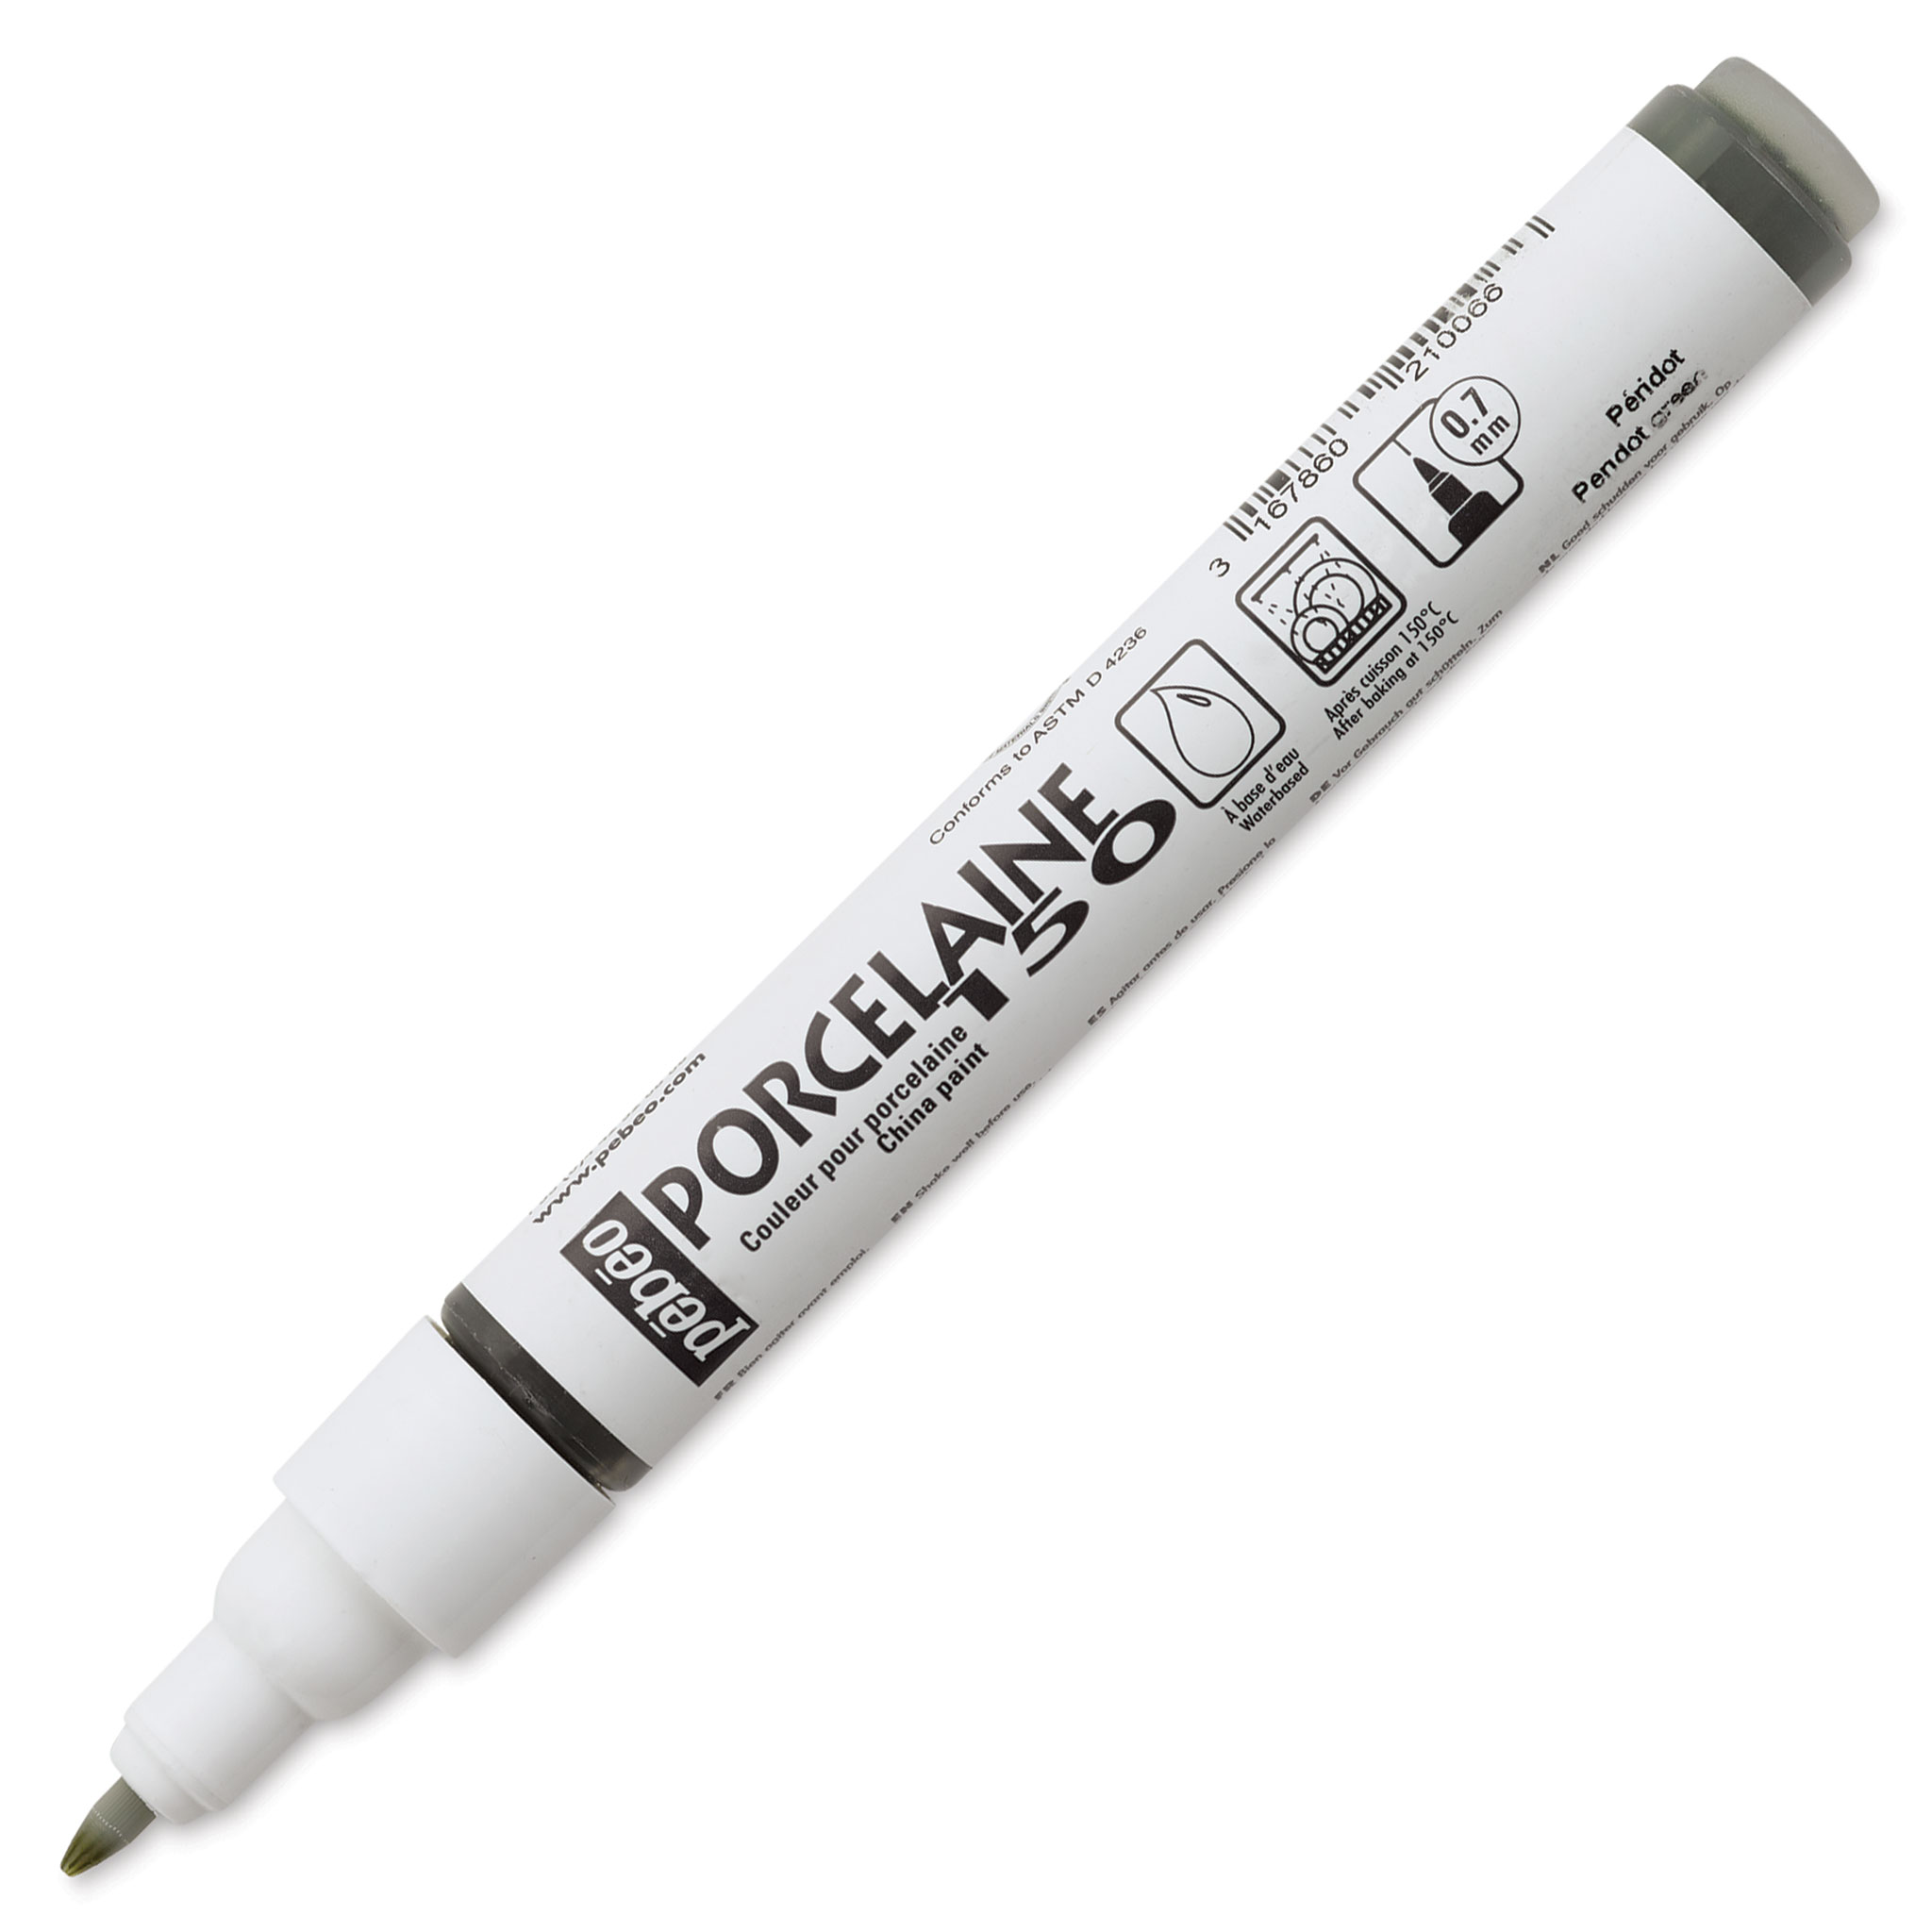 doe-c-doe: how I use porcelaine pens